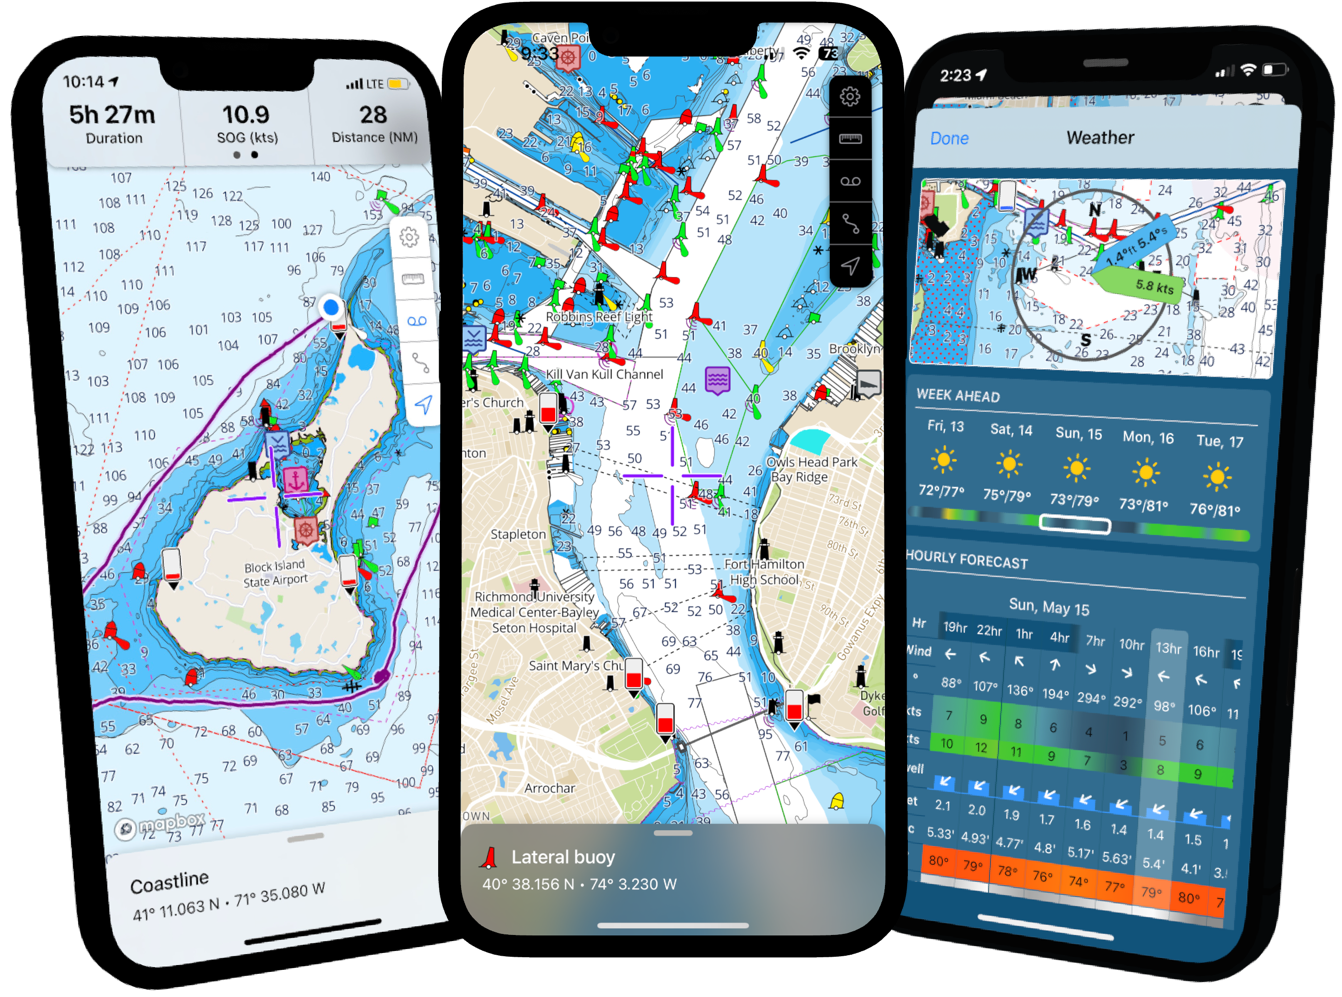 Sea Drive on iPad and iPhone